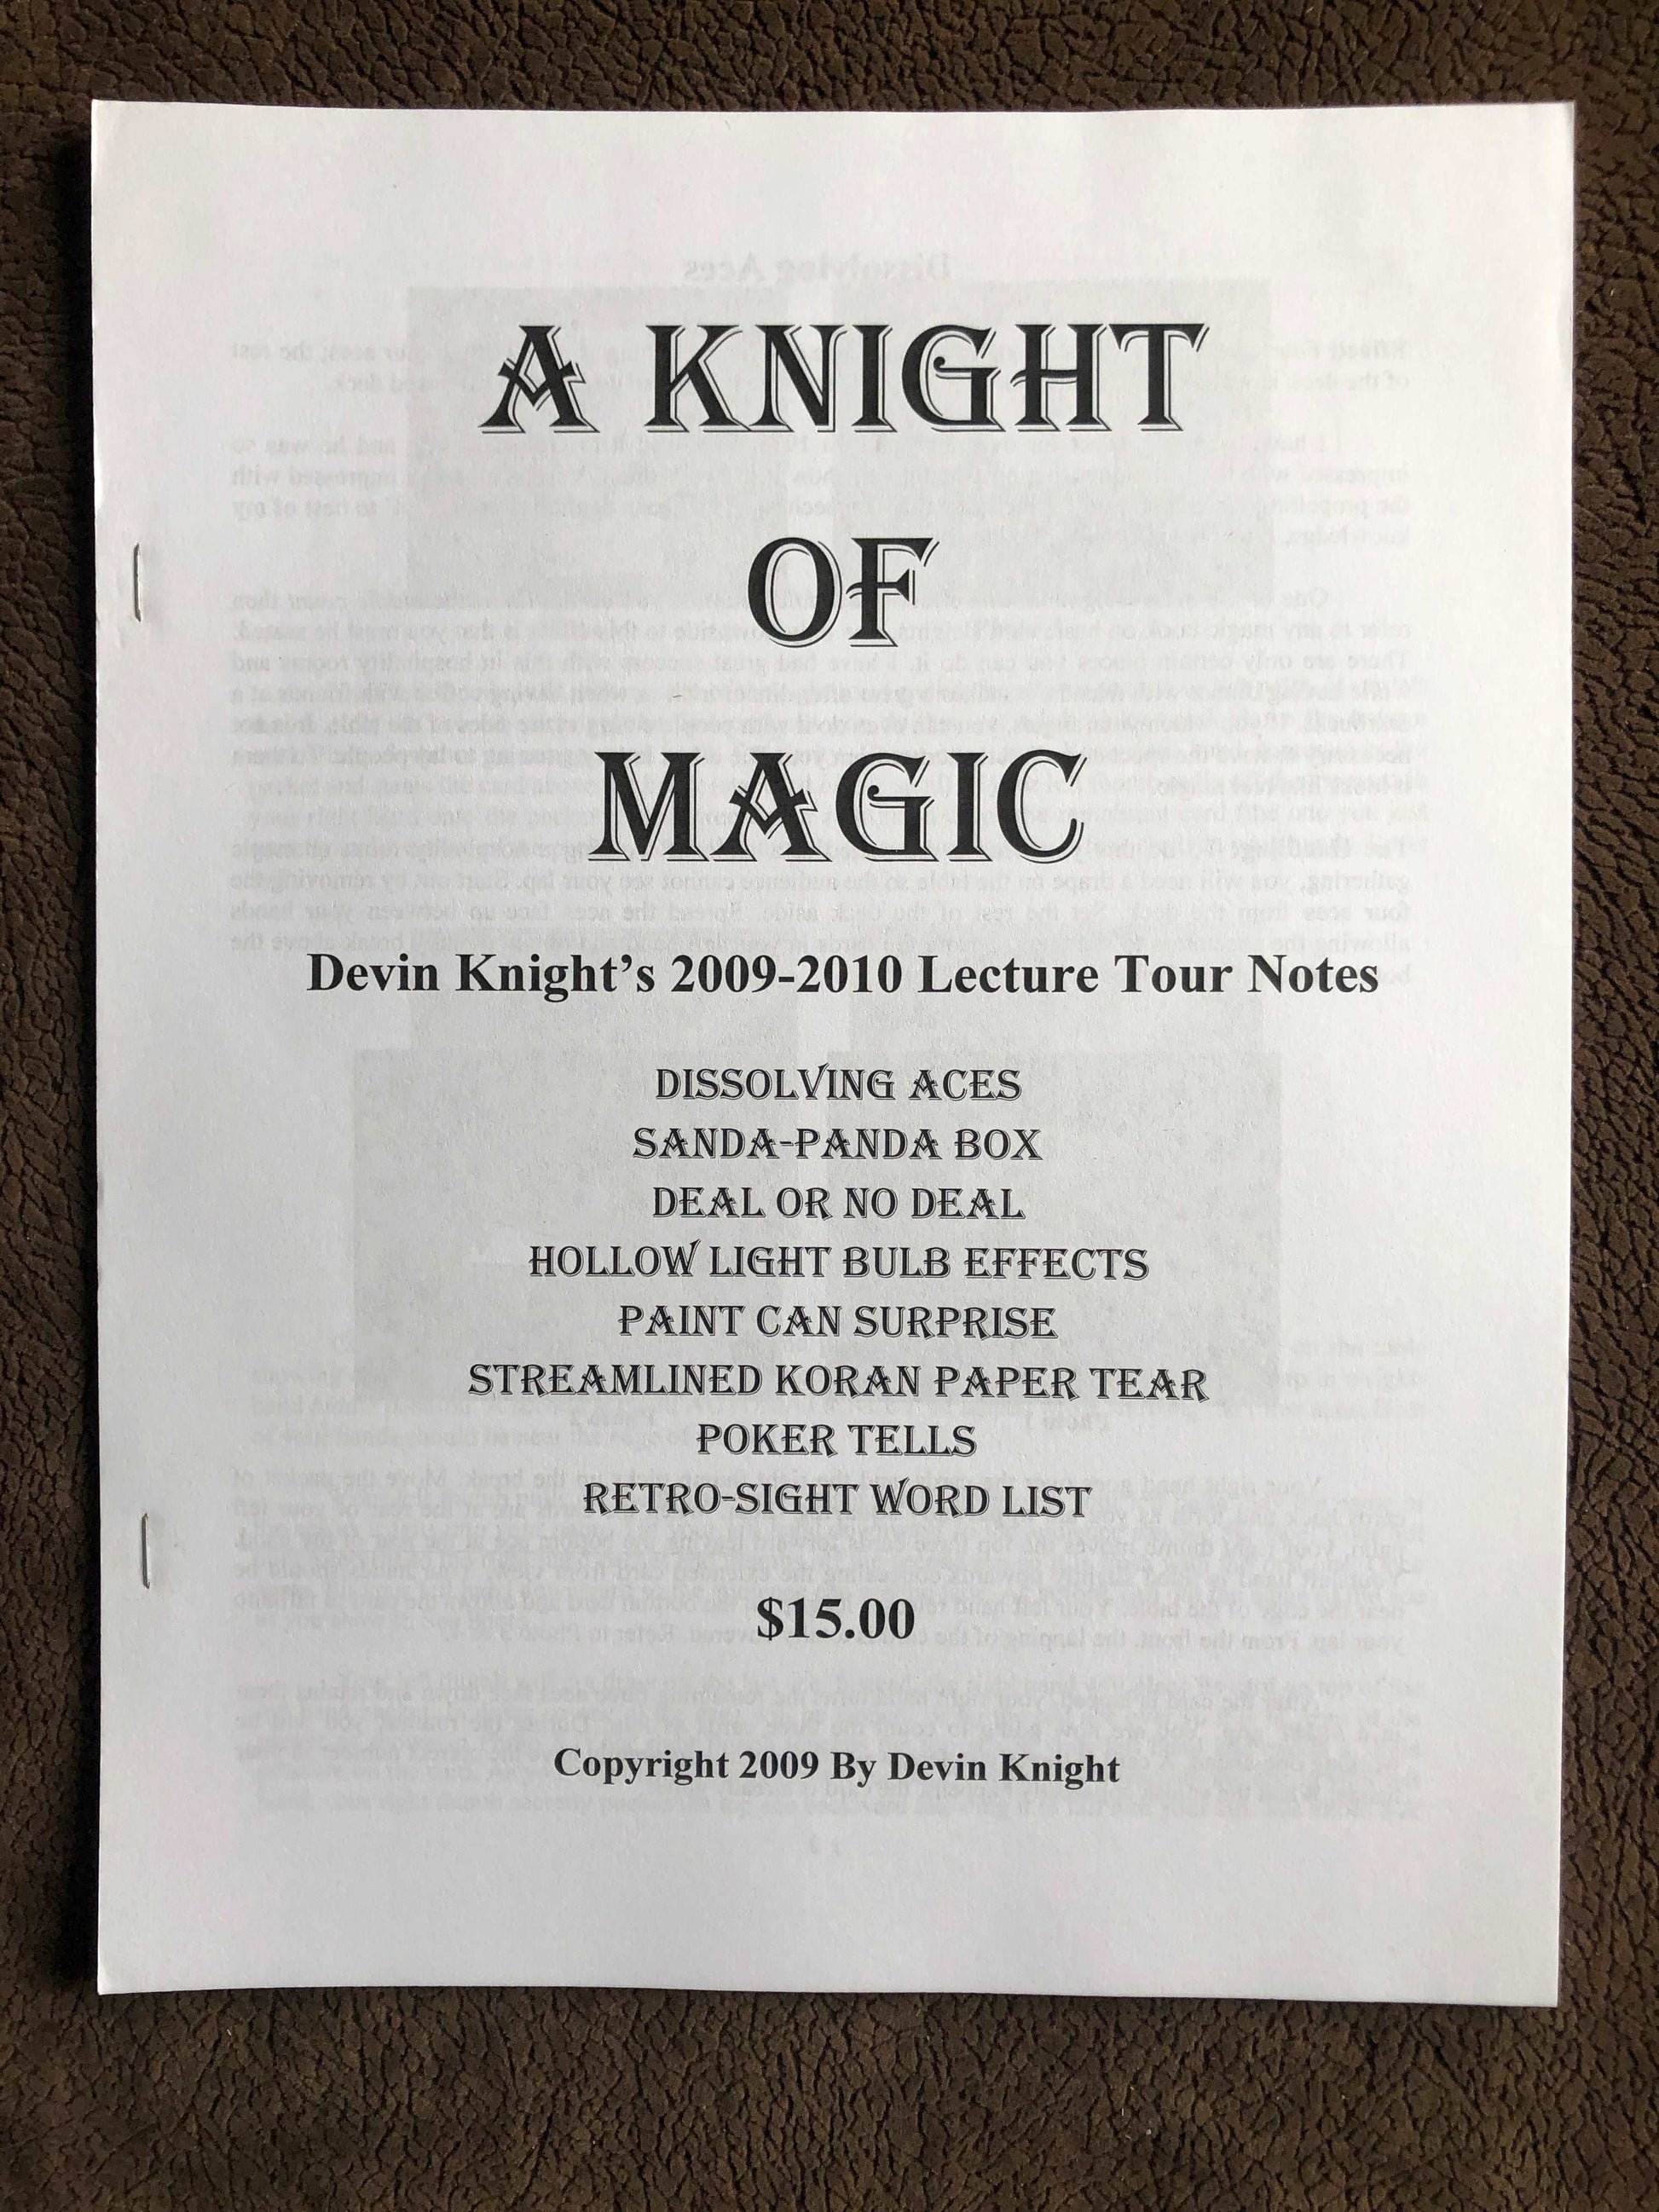 A Knight of Magic - Devin Knight